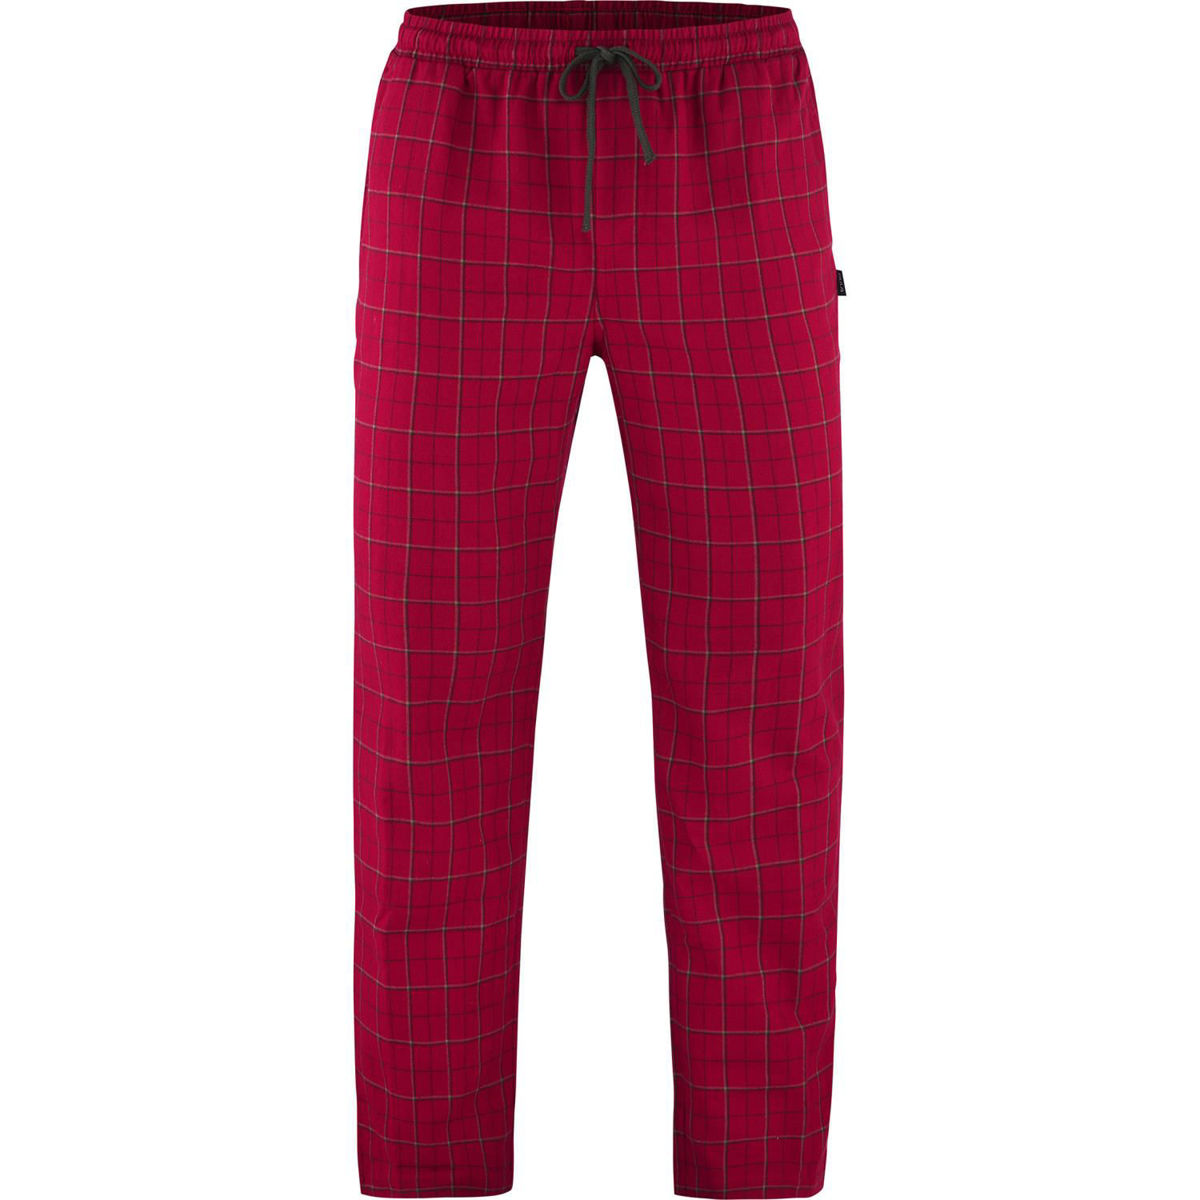 Bilde av Checked Pyjamas Pants